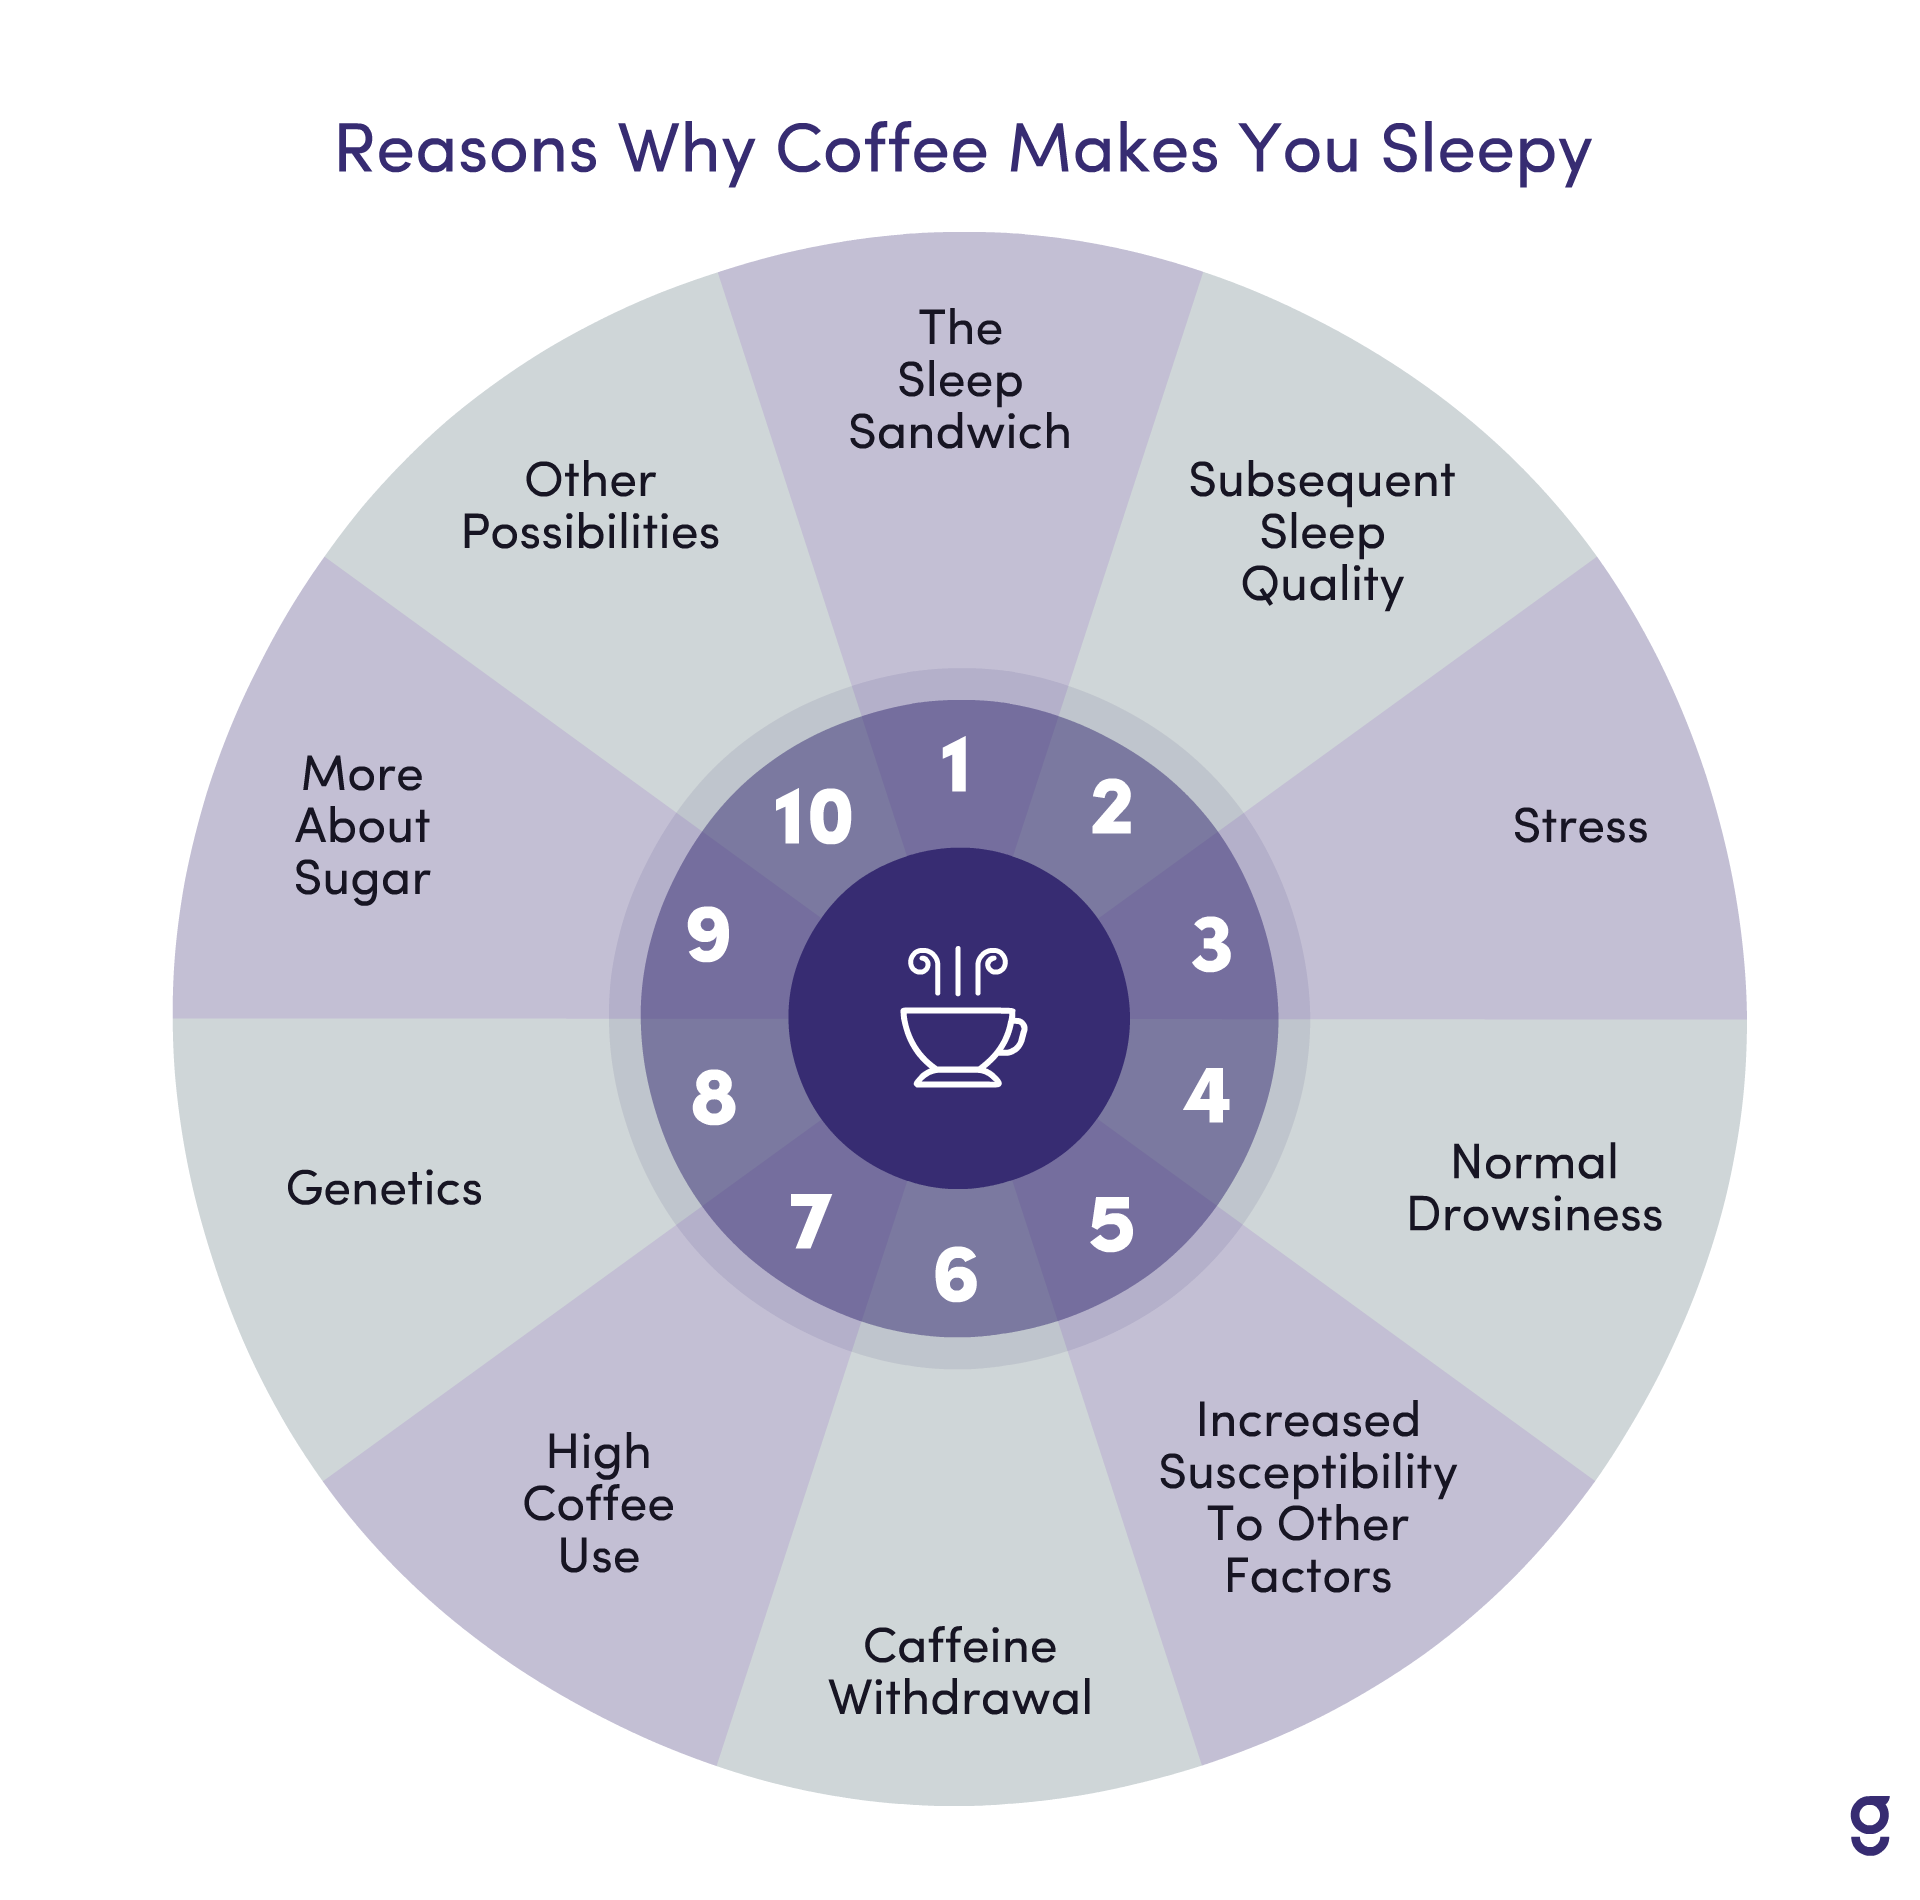 Can Caffeine Addiction Make You Sleepy?